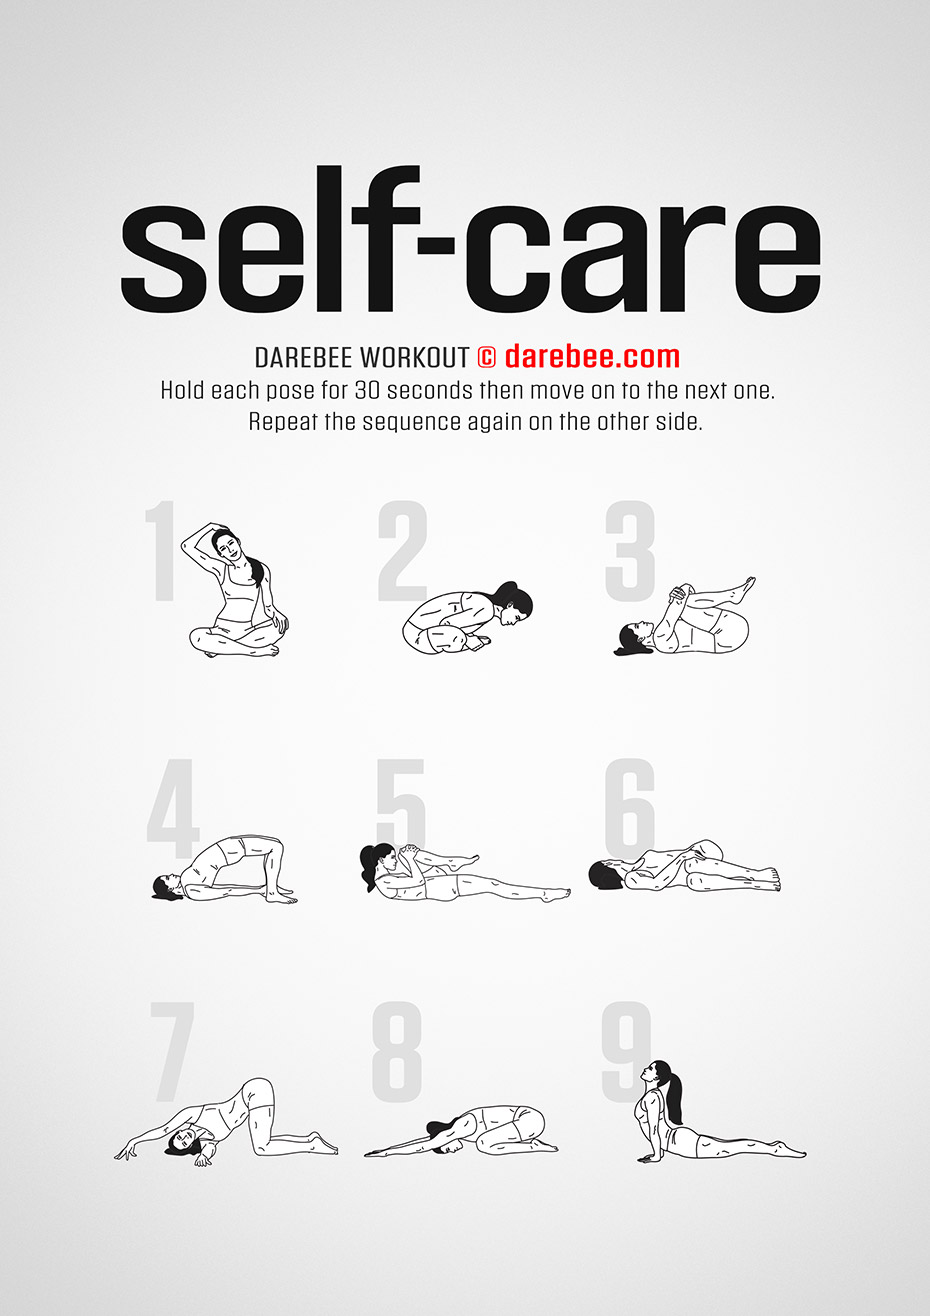 DAREBEE Workouts  Morning workout, Workout, Morning yoga routine